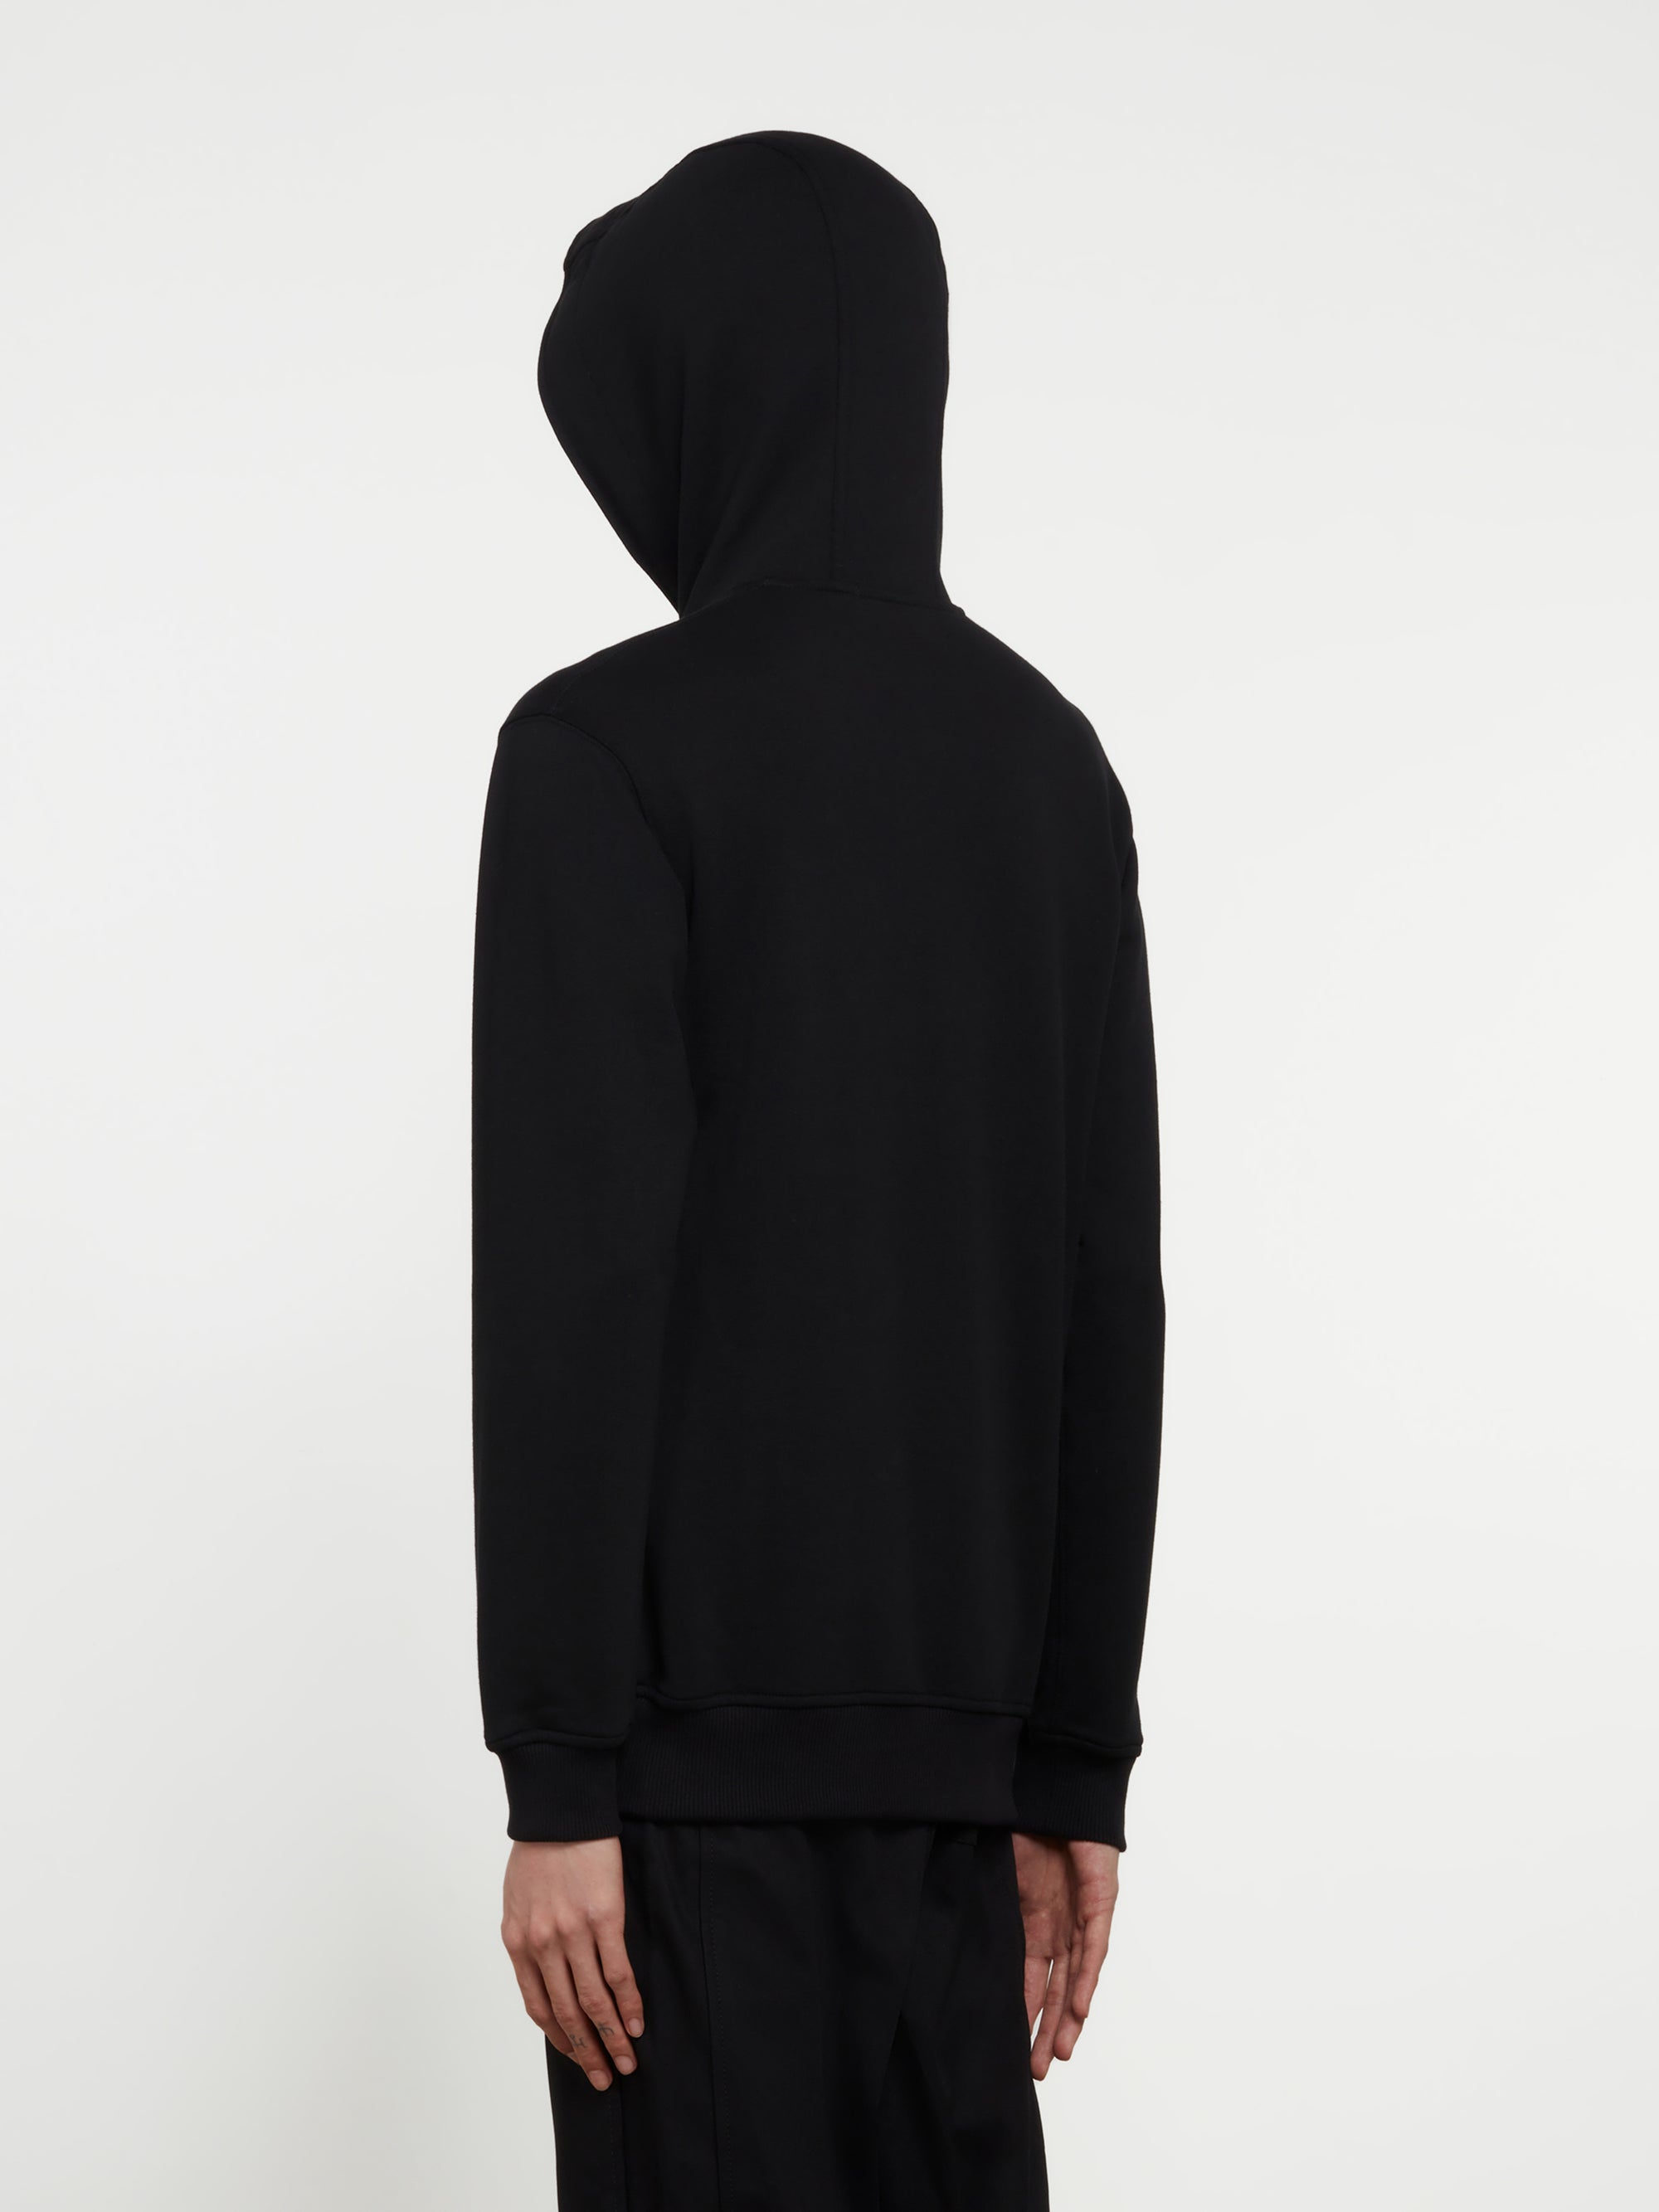 CDG Shirt - Lacoste Men's Hooded Sweatshirt - (Black) view 3